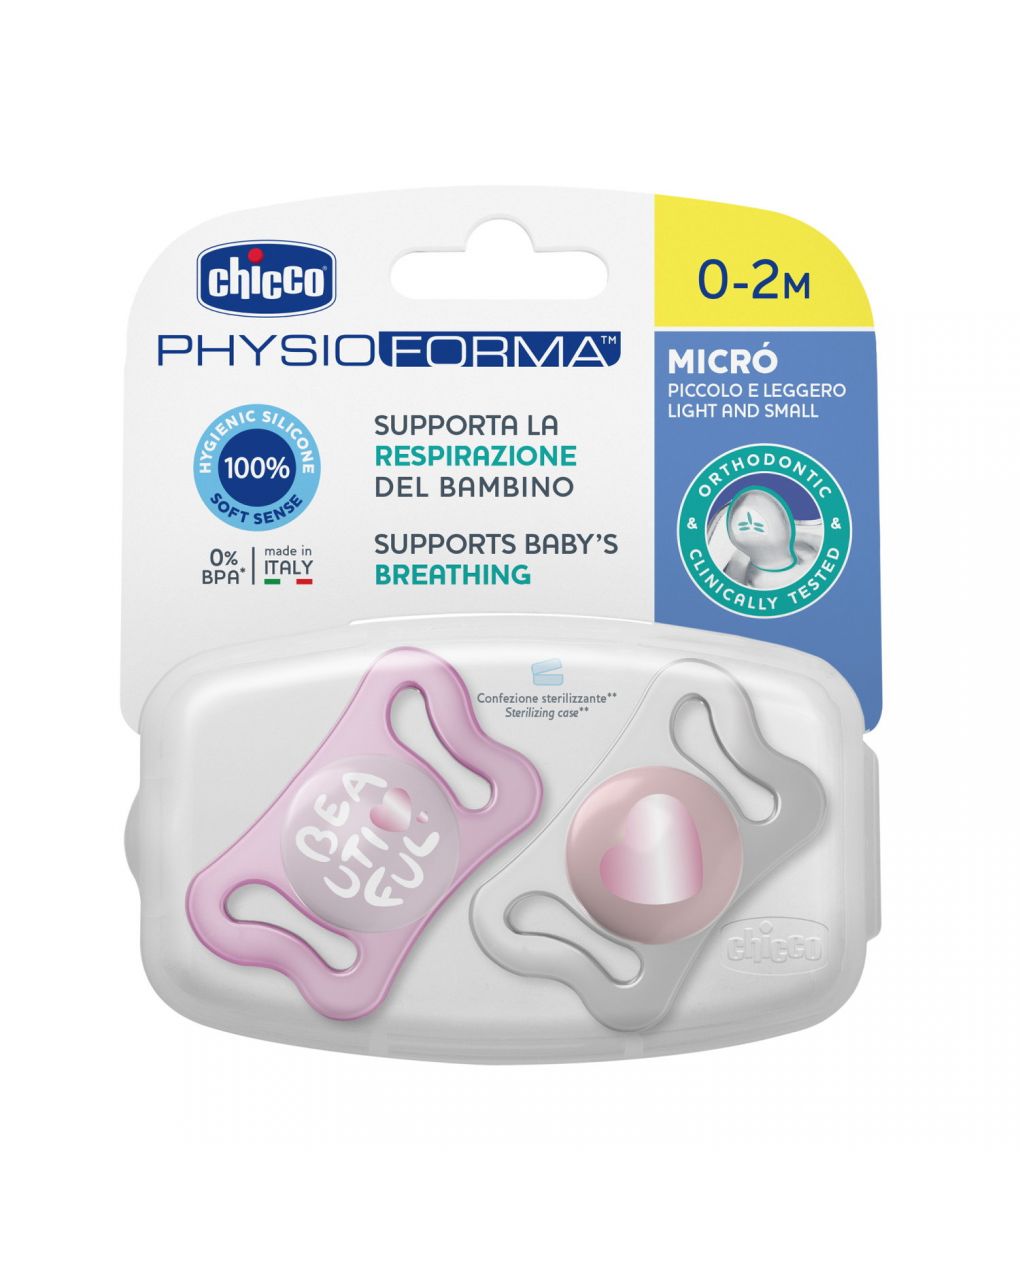 Physioforma micrò pink silicone 0-2 mesi 2 pezzi - chicco - Chicco